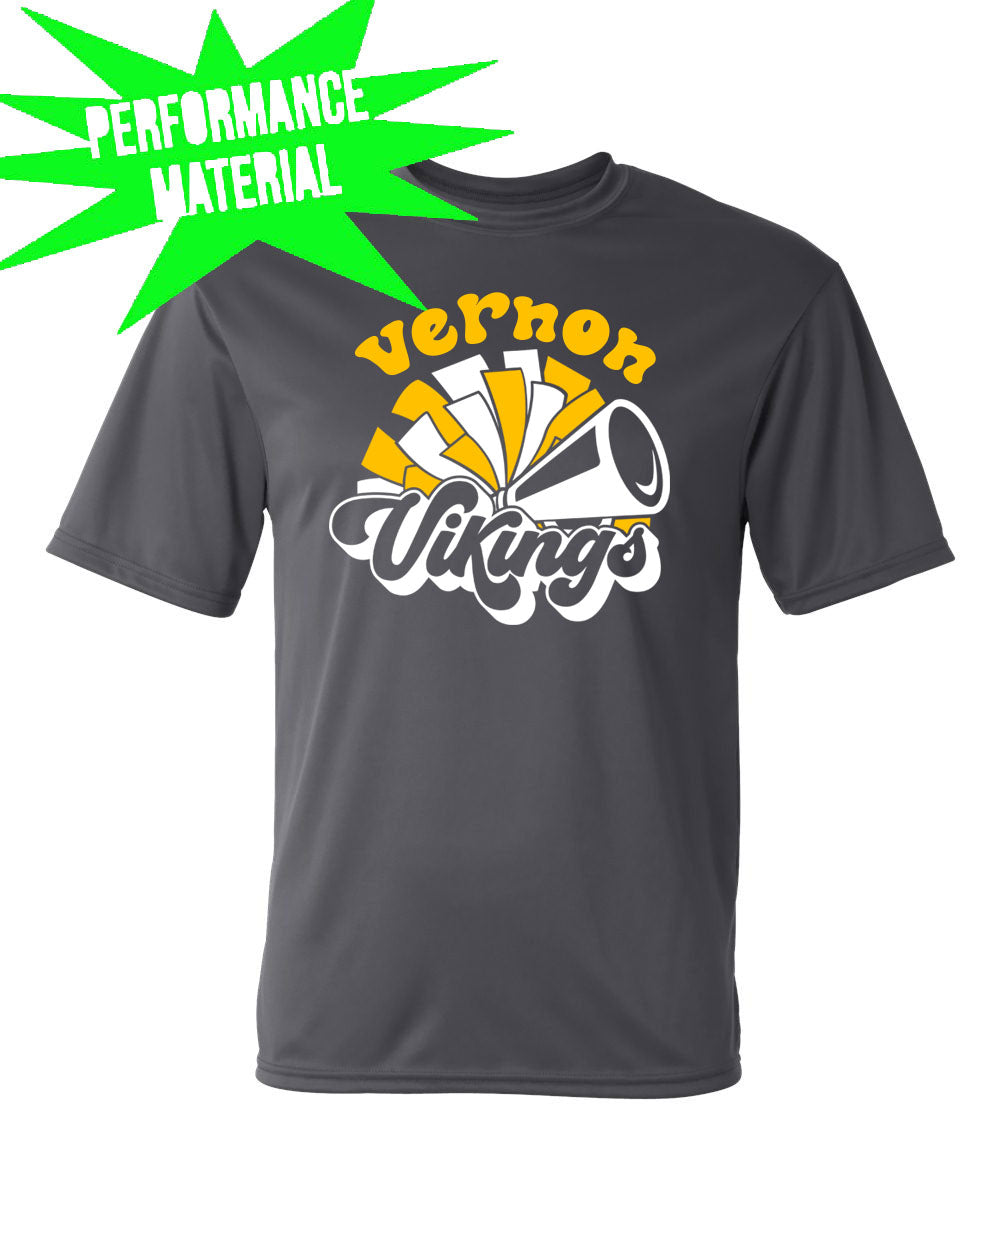 Vernon Vikings Cheer Performance Material T-Shirt  Design 12